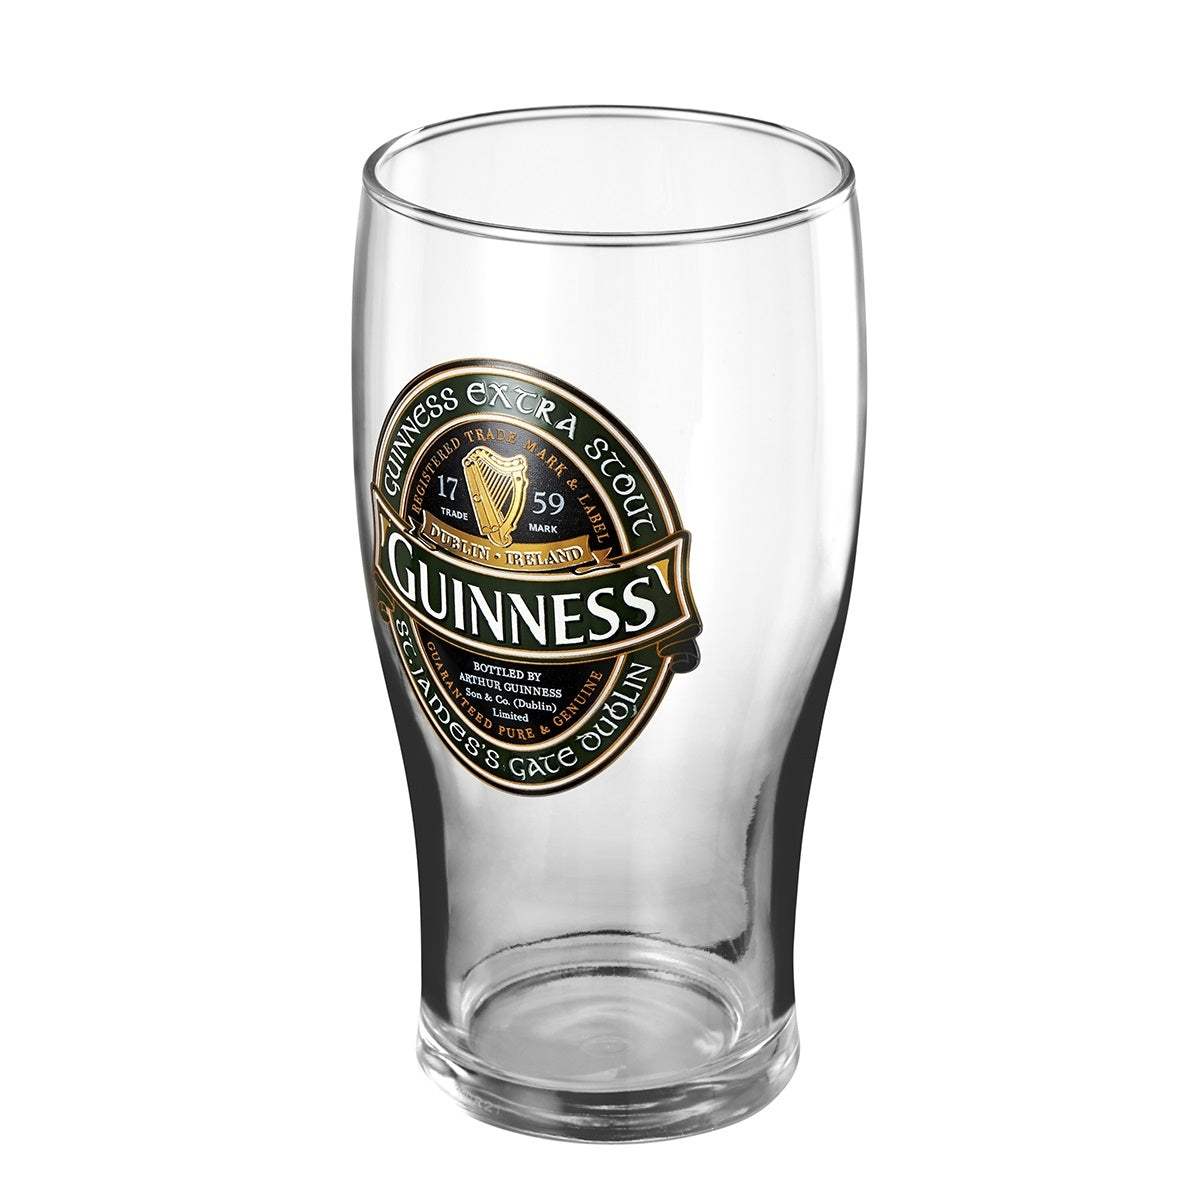 Guinness Ireland Collection pint glass: Guinness Ireland Collection Pint Glass by Guinness.